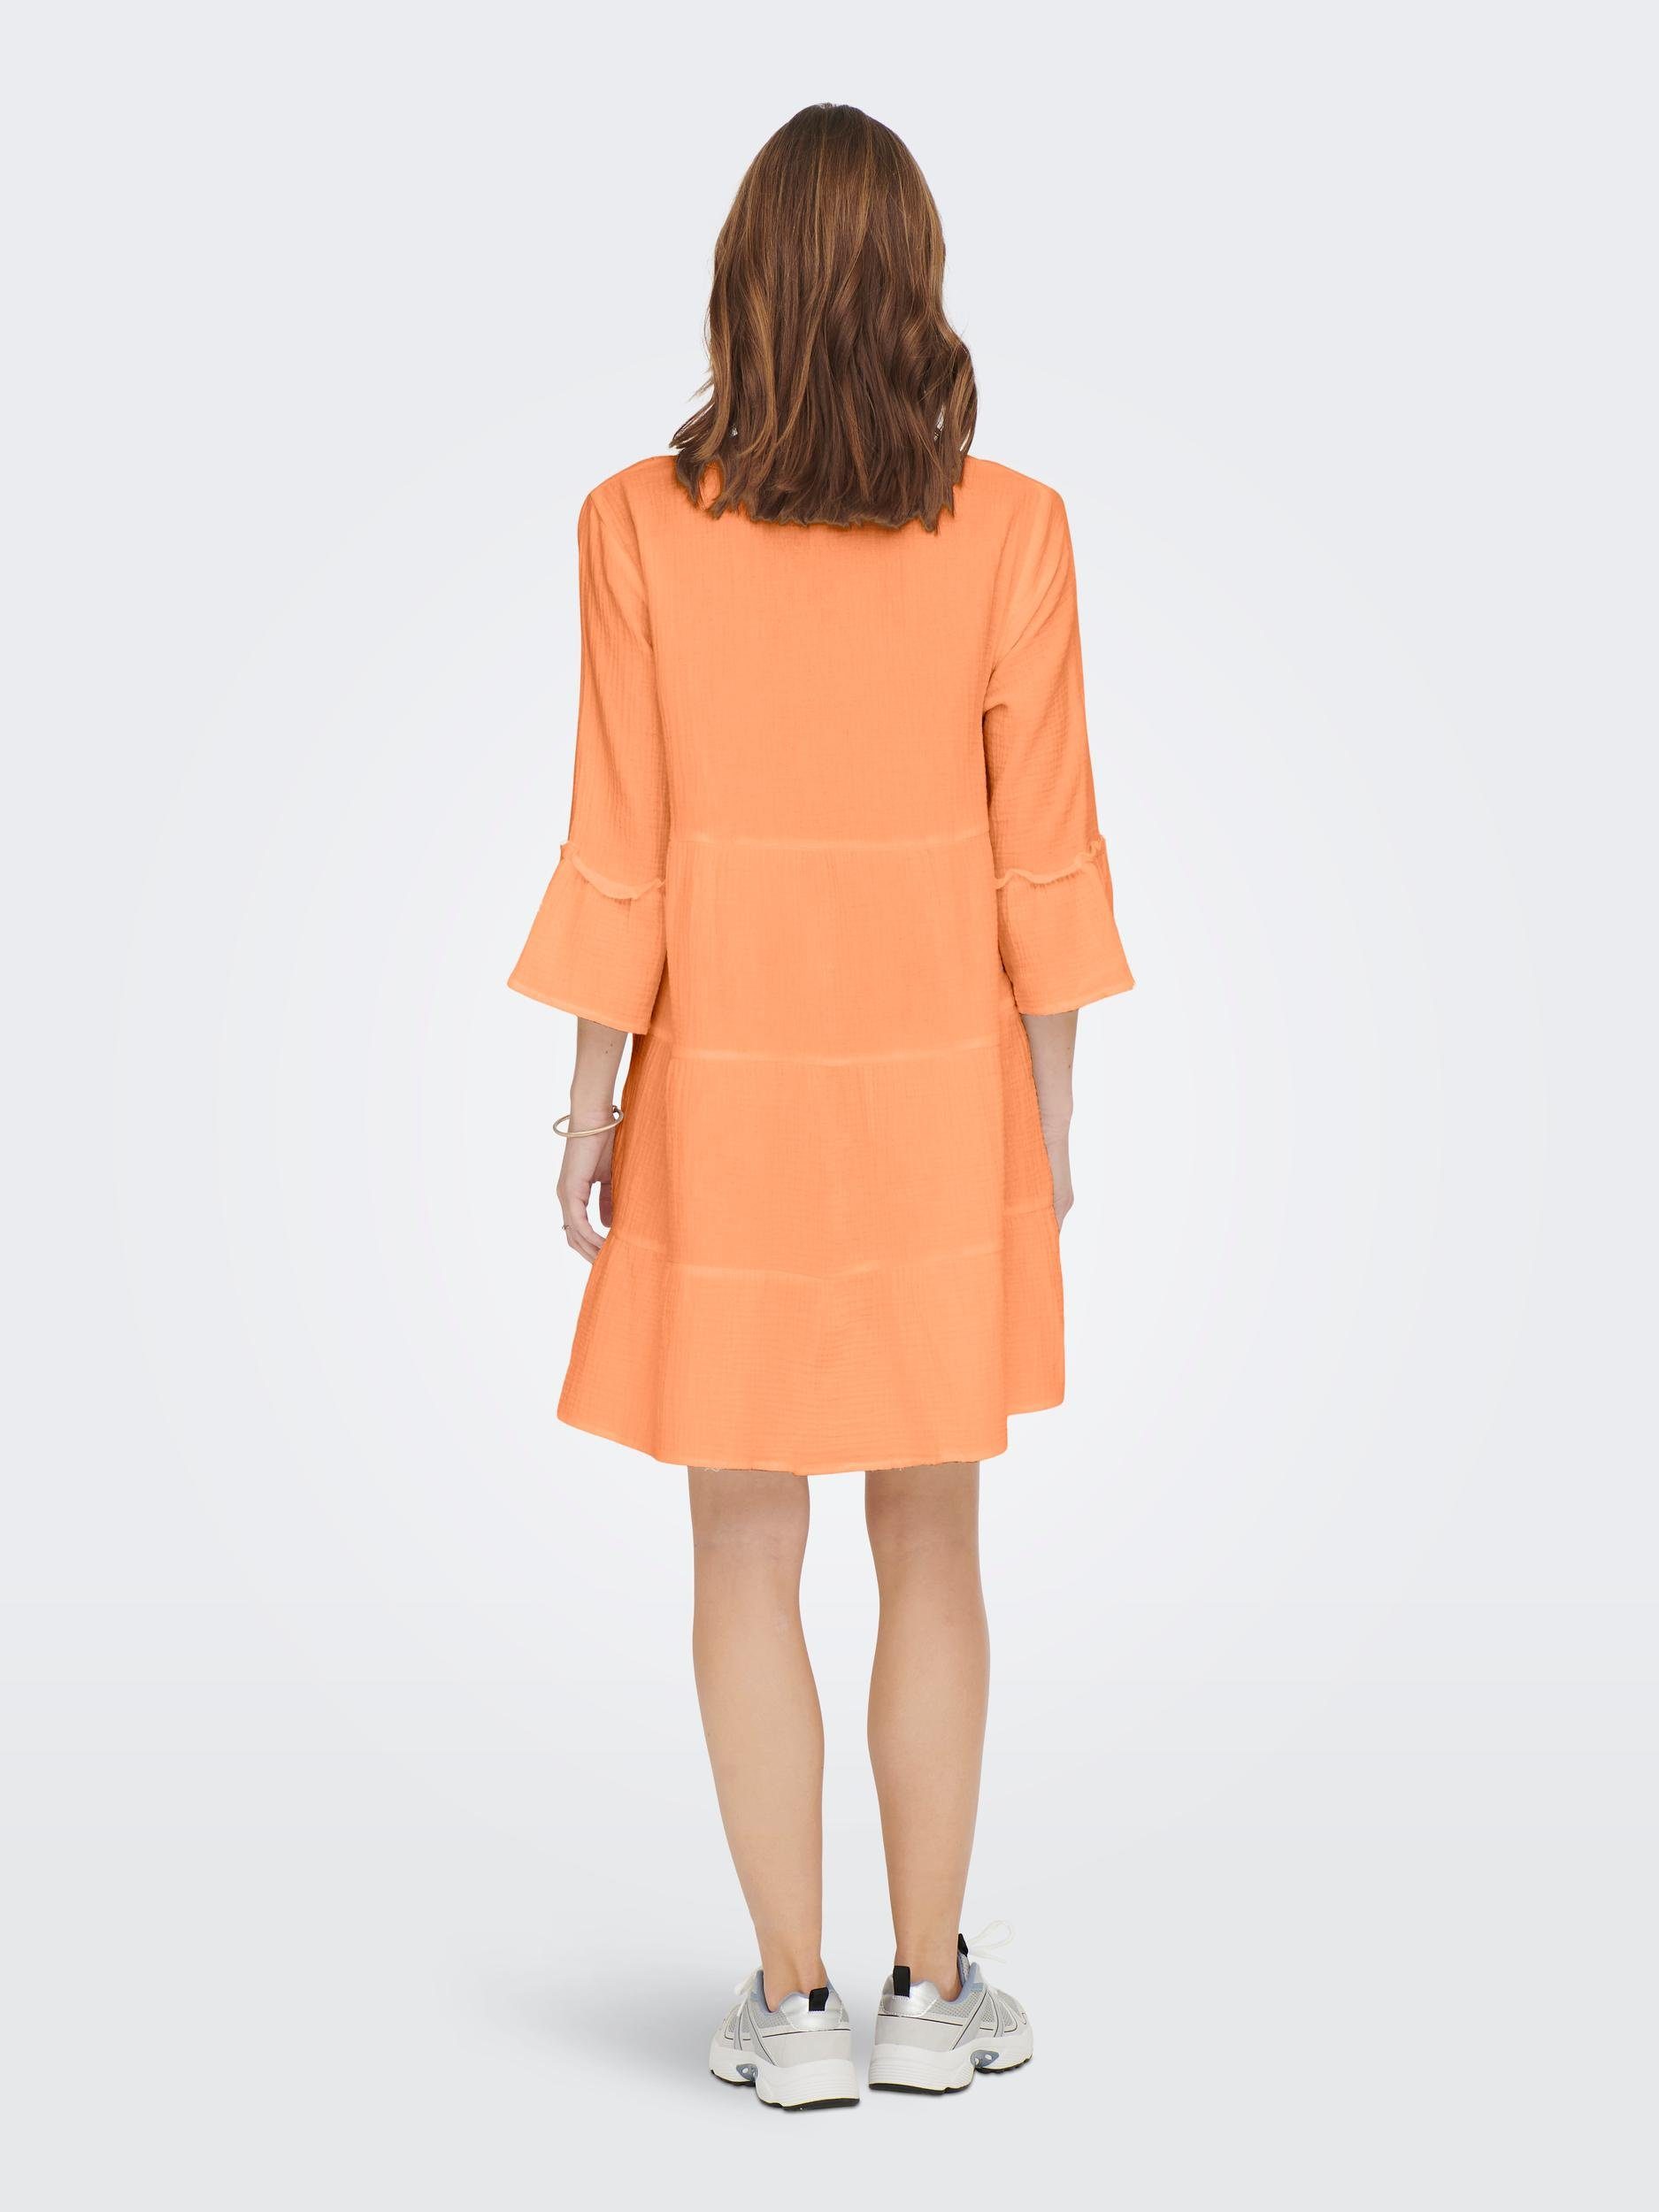 Minikleid Kleid orange ONLY